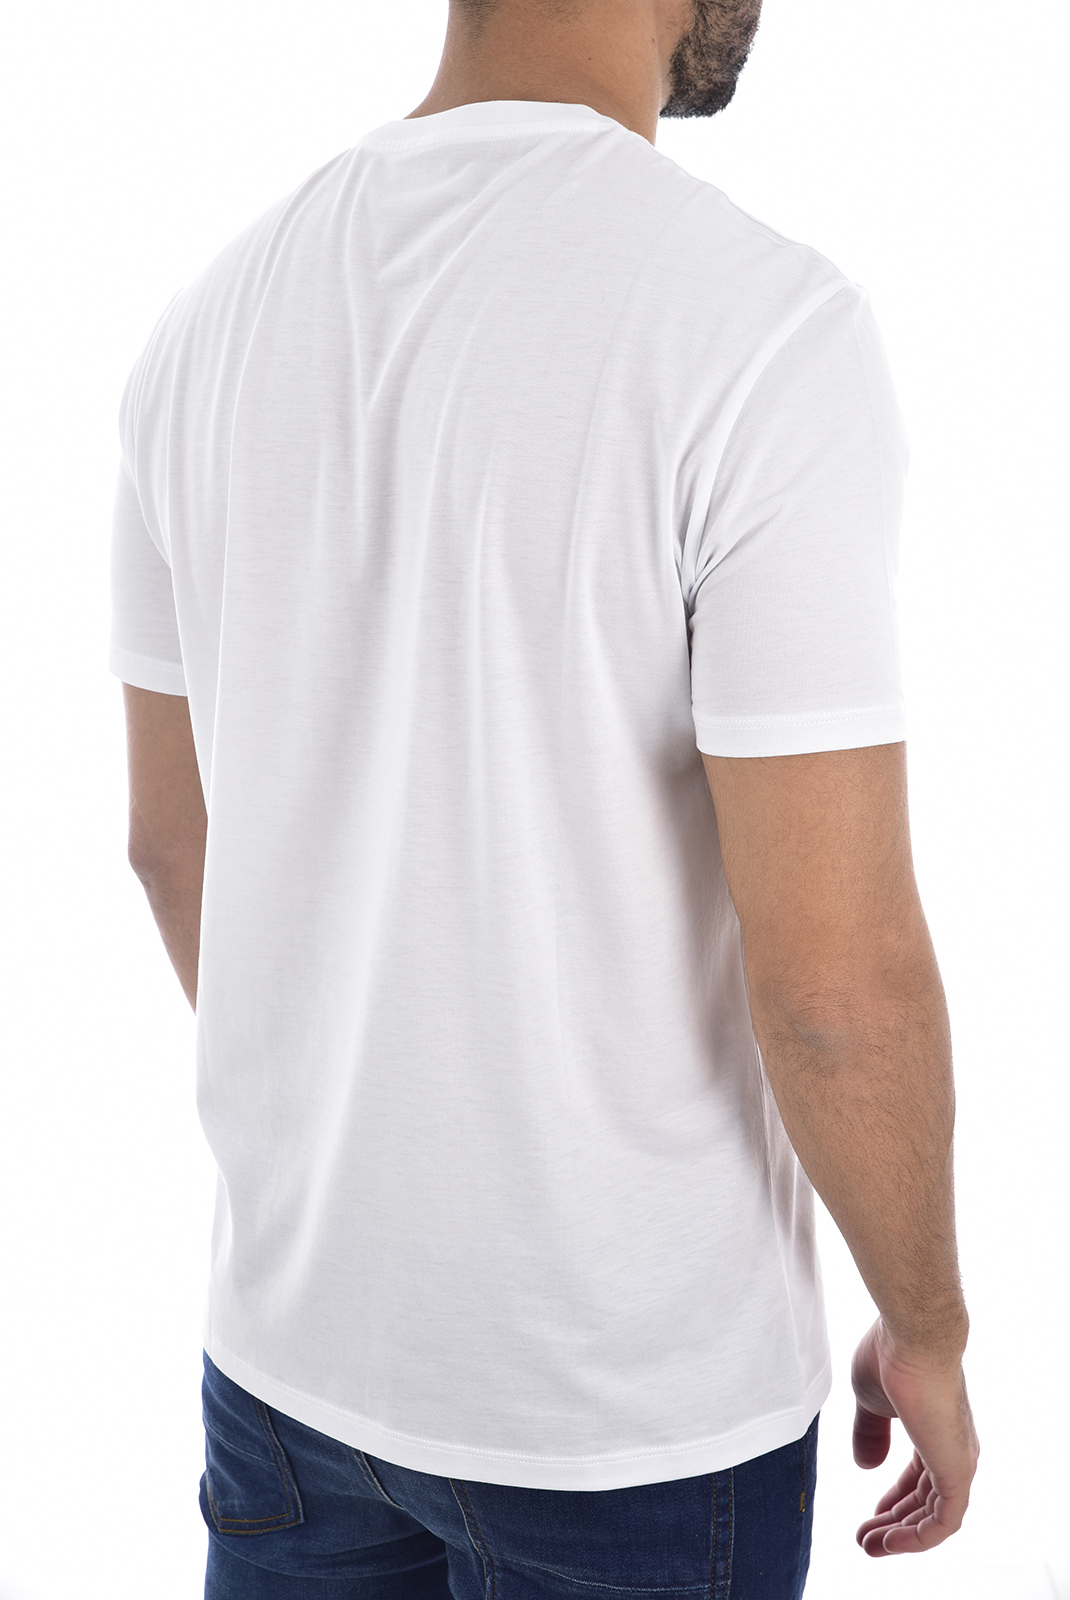 Tee-shirt blanc à manches courtes Emporio Armani - 6gztau Zja5z